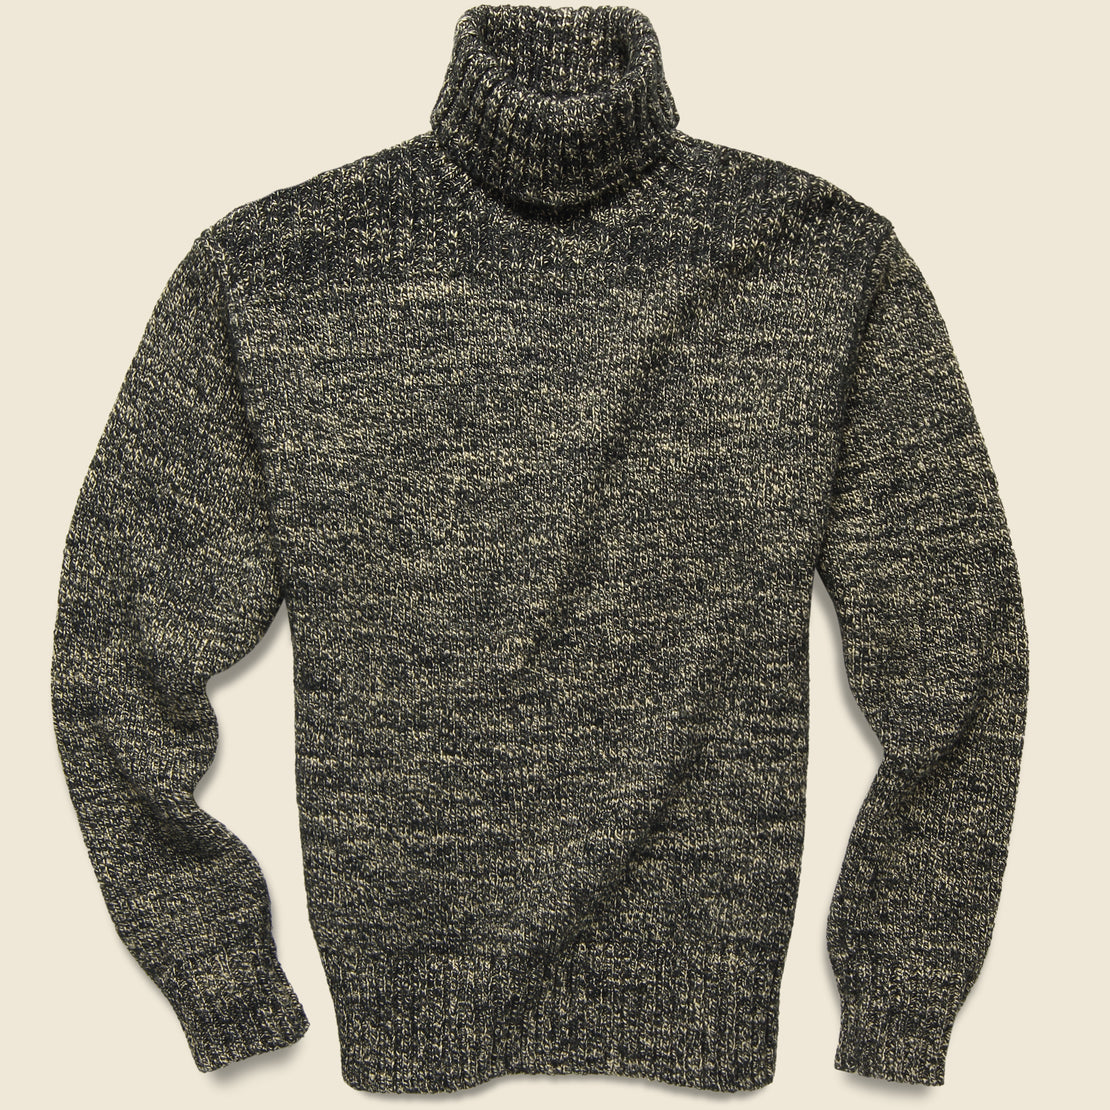 RRL Marled Cotton-Blend Turtleneck Sweater - Black/Cream